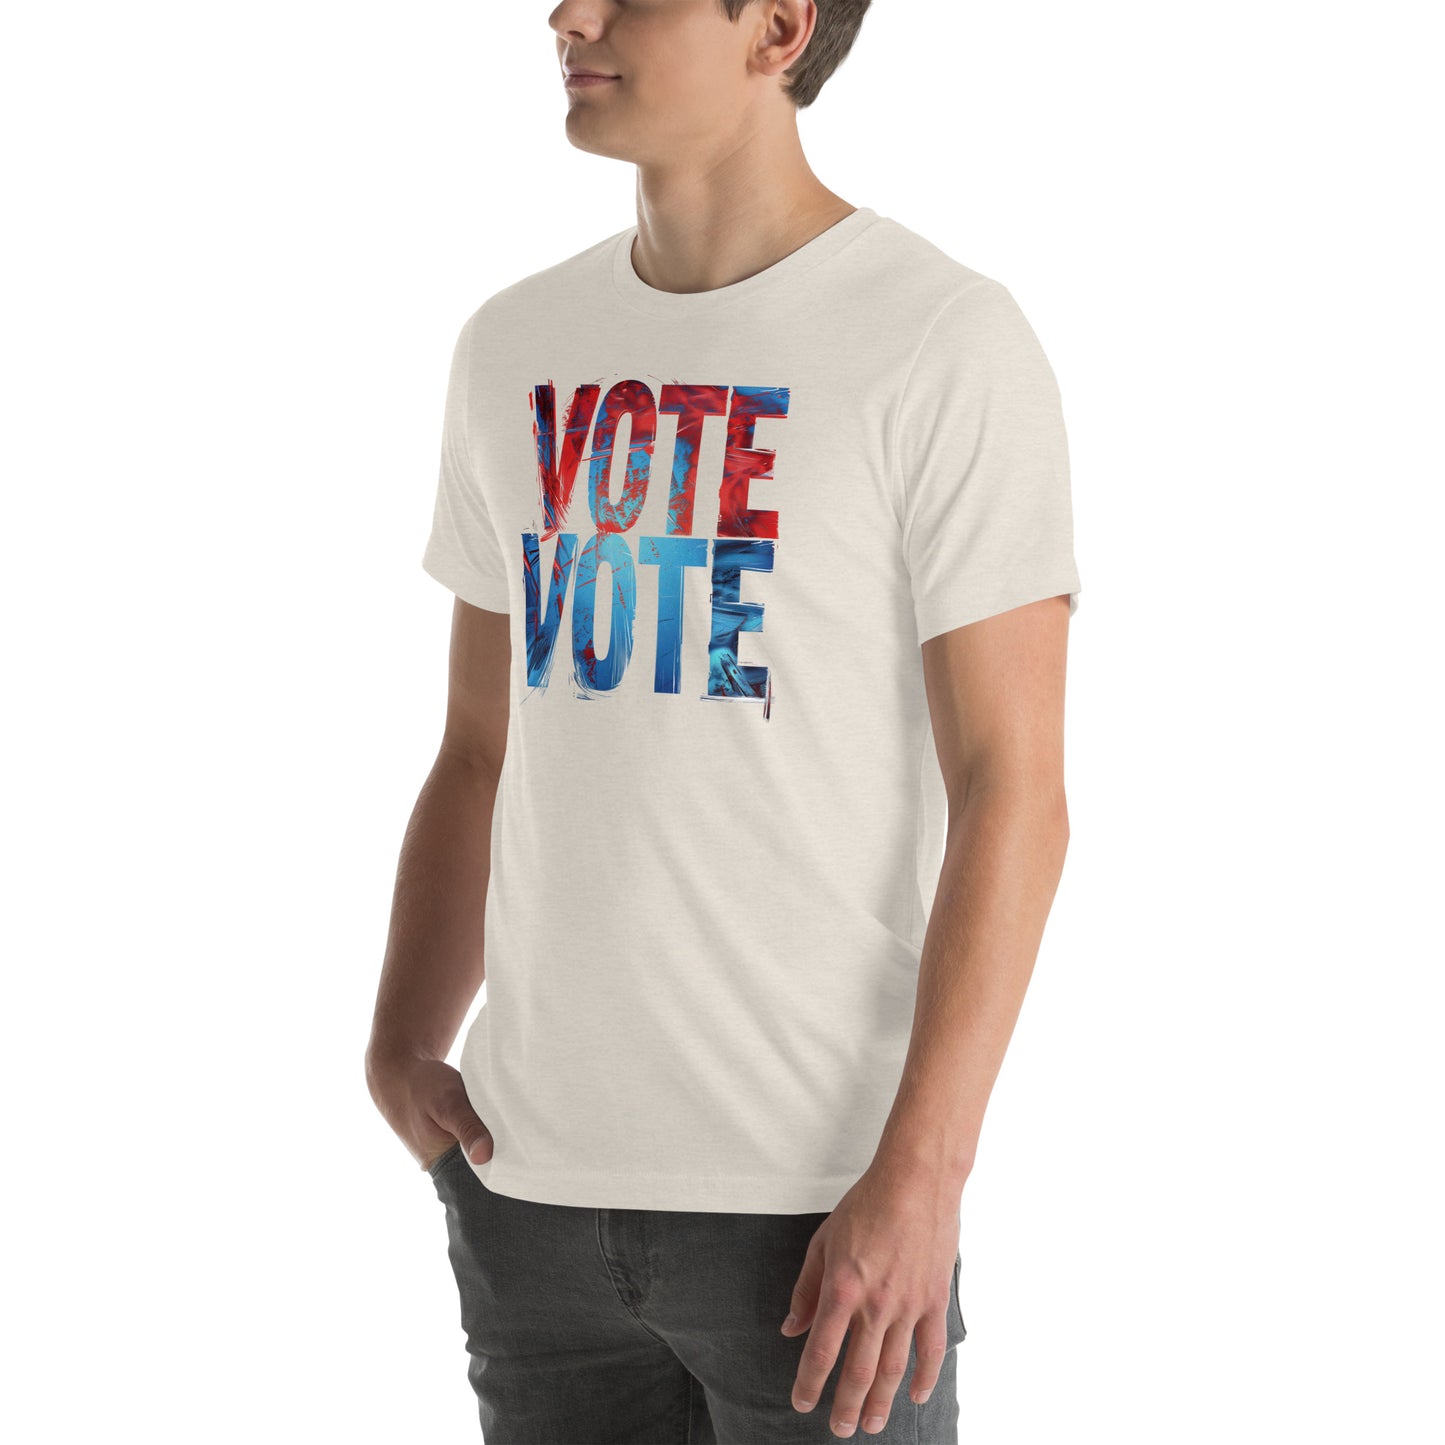 Vote Unisex T-Shirt